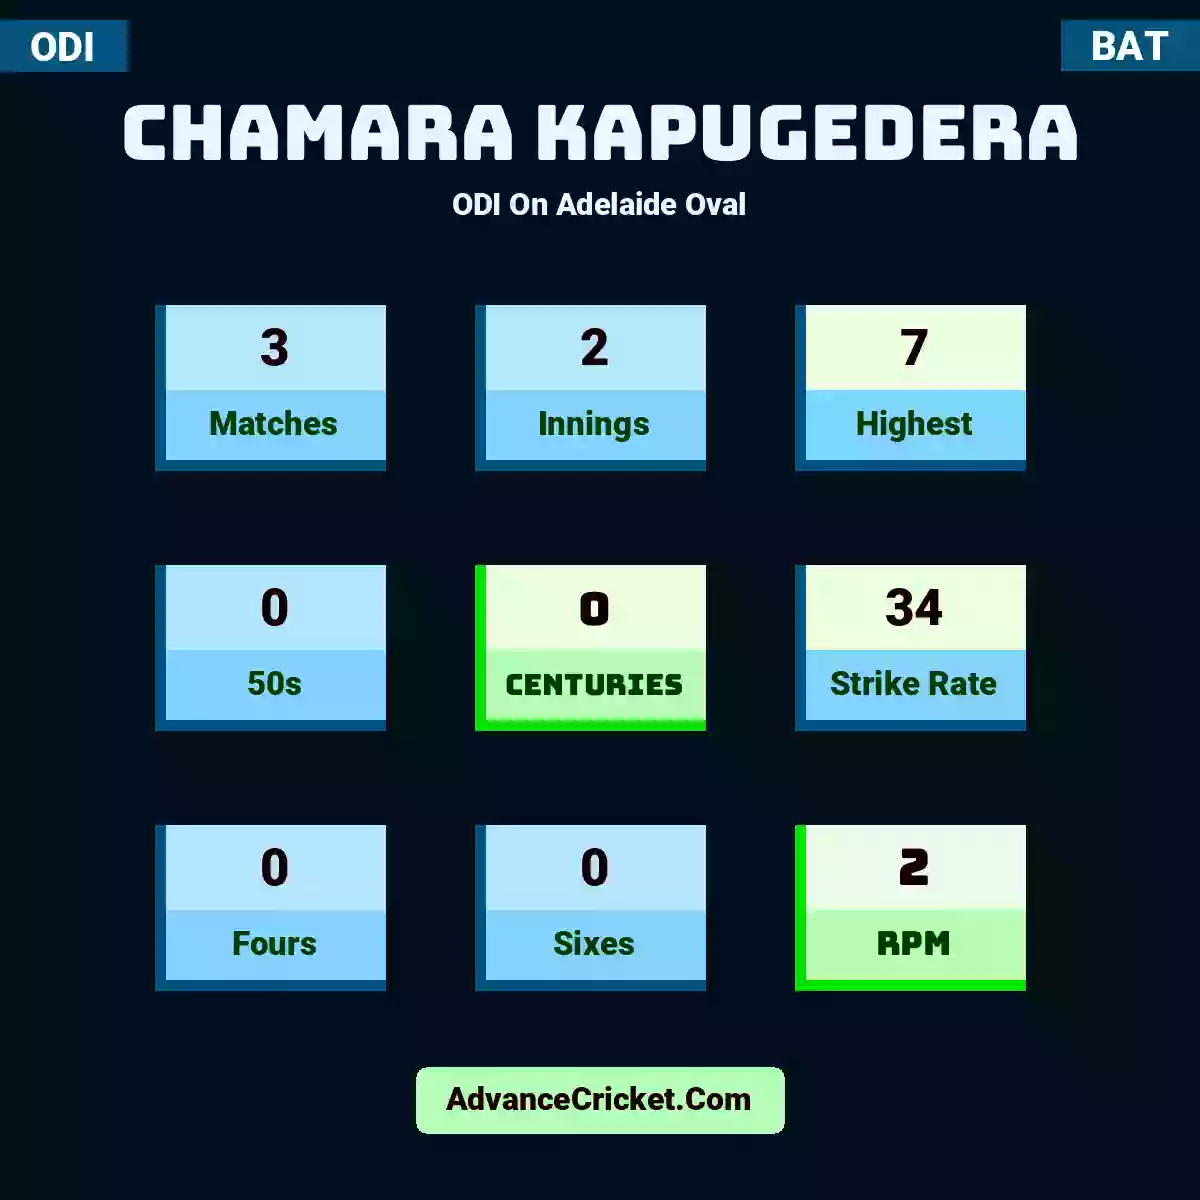 Chamara Kapugedera ODI  On Adelaide Oval, Chamara Kapugedera played 3 matches, scored 7 runs as highest, 0 half-centuries, and 0 centuries, with a strike rate of 34. C.Kapugedera hit 0 fours and 0 sixes, with an RPM of 2.